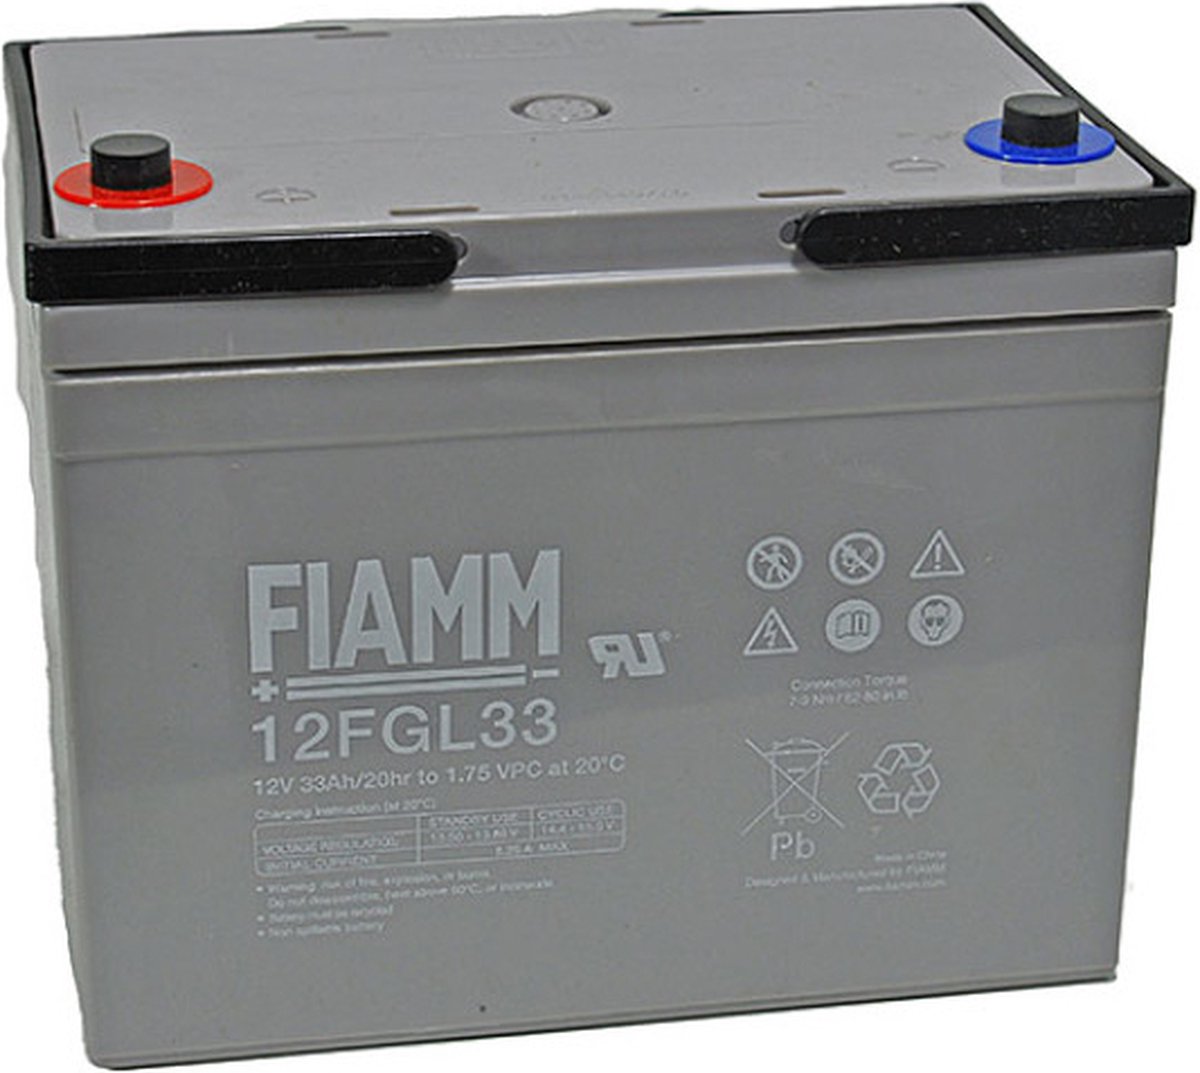 Fiamm 12FGL33 loodbatterij met M6-schroefaansluiting 12V, 33000 mAh